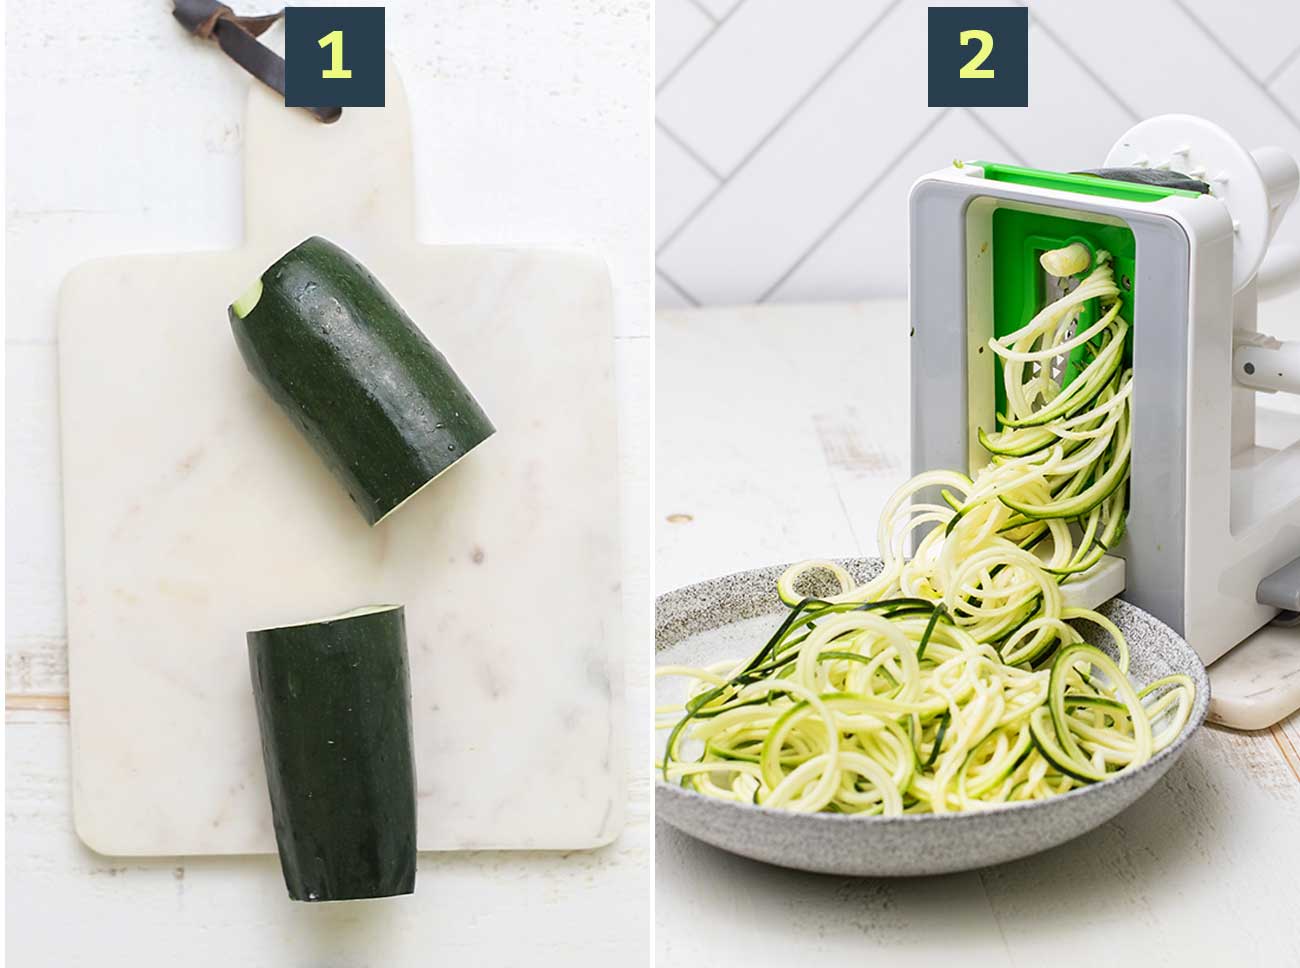  Handheld Spiralizer Vegetable Slicer, 4 in 1 Heavy Duty Veggie  Spiral Cutter - Zoodle Pasta Spaghetti Maker : Home & Kitchen